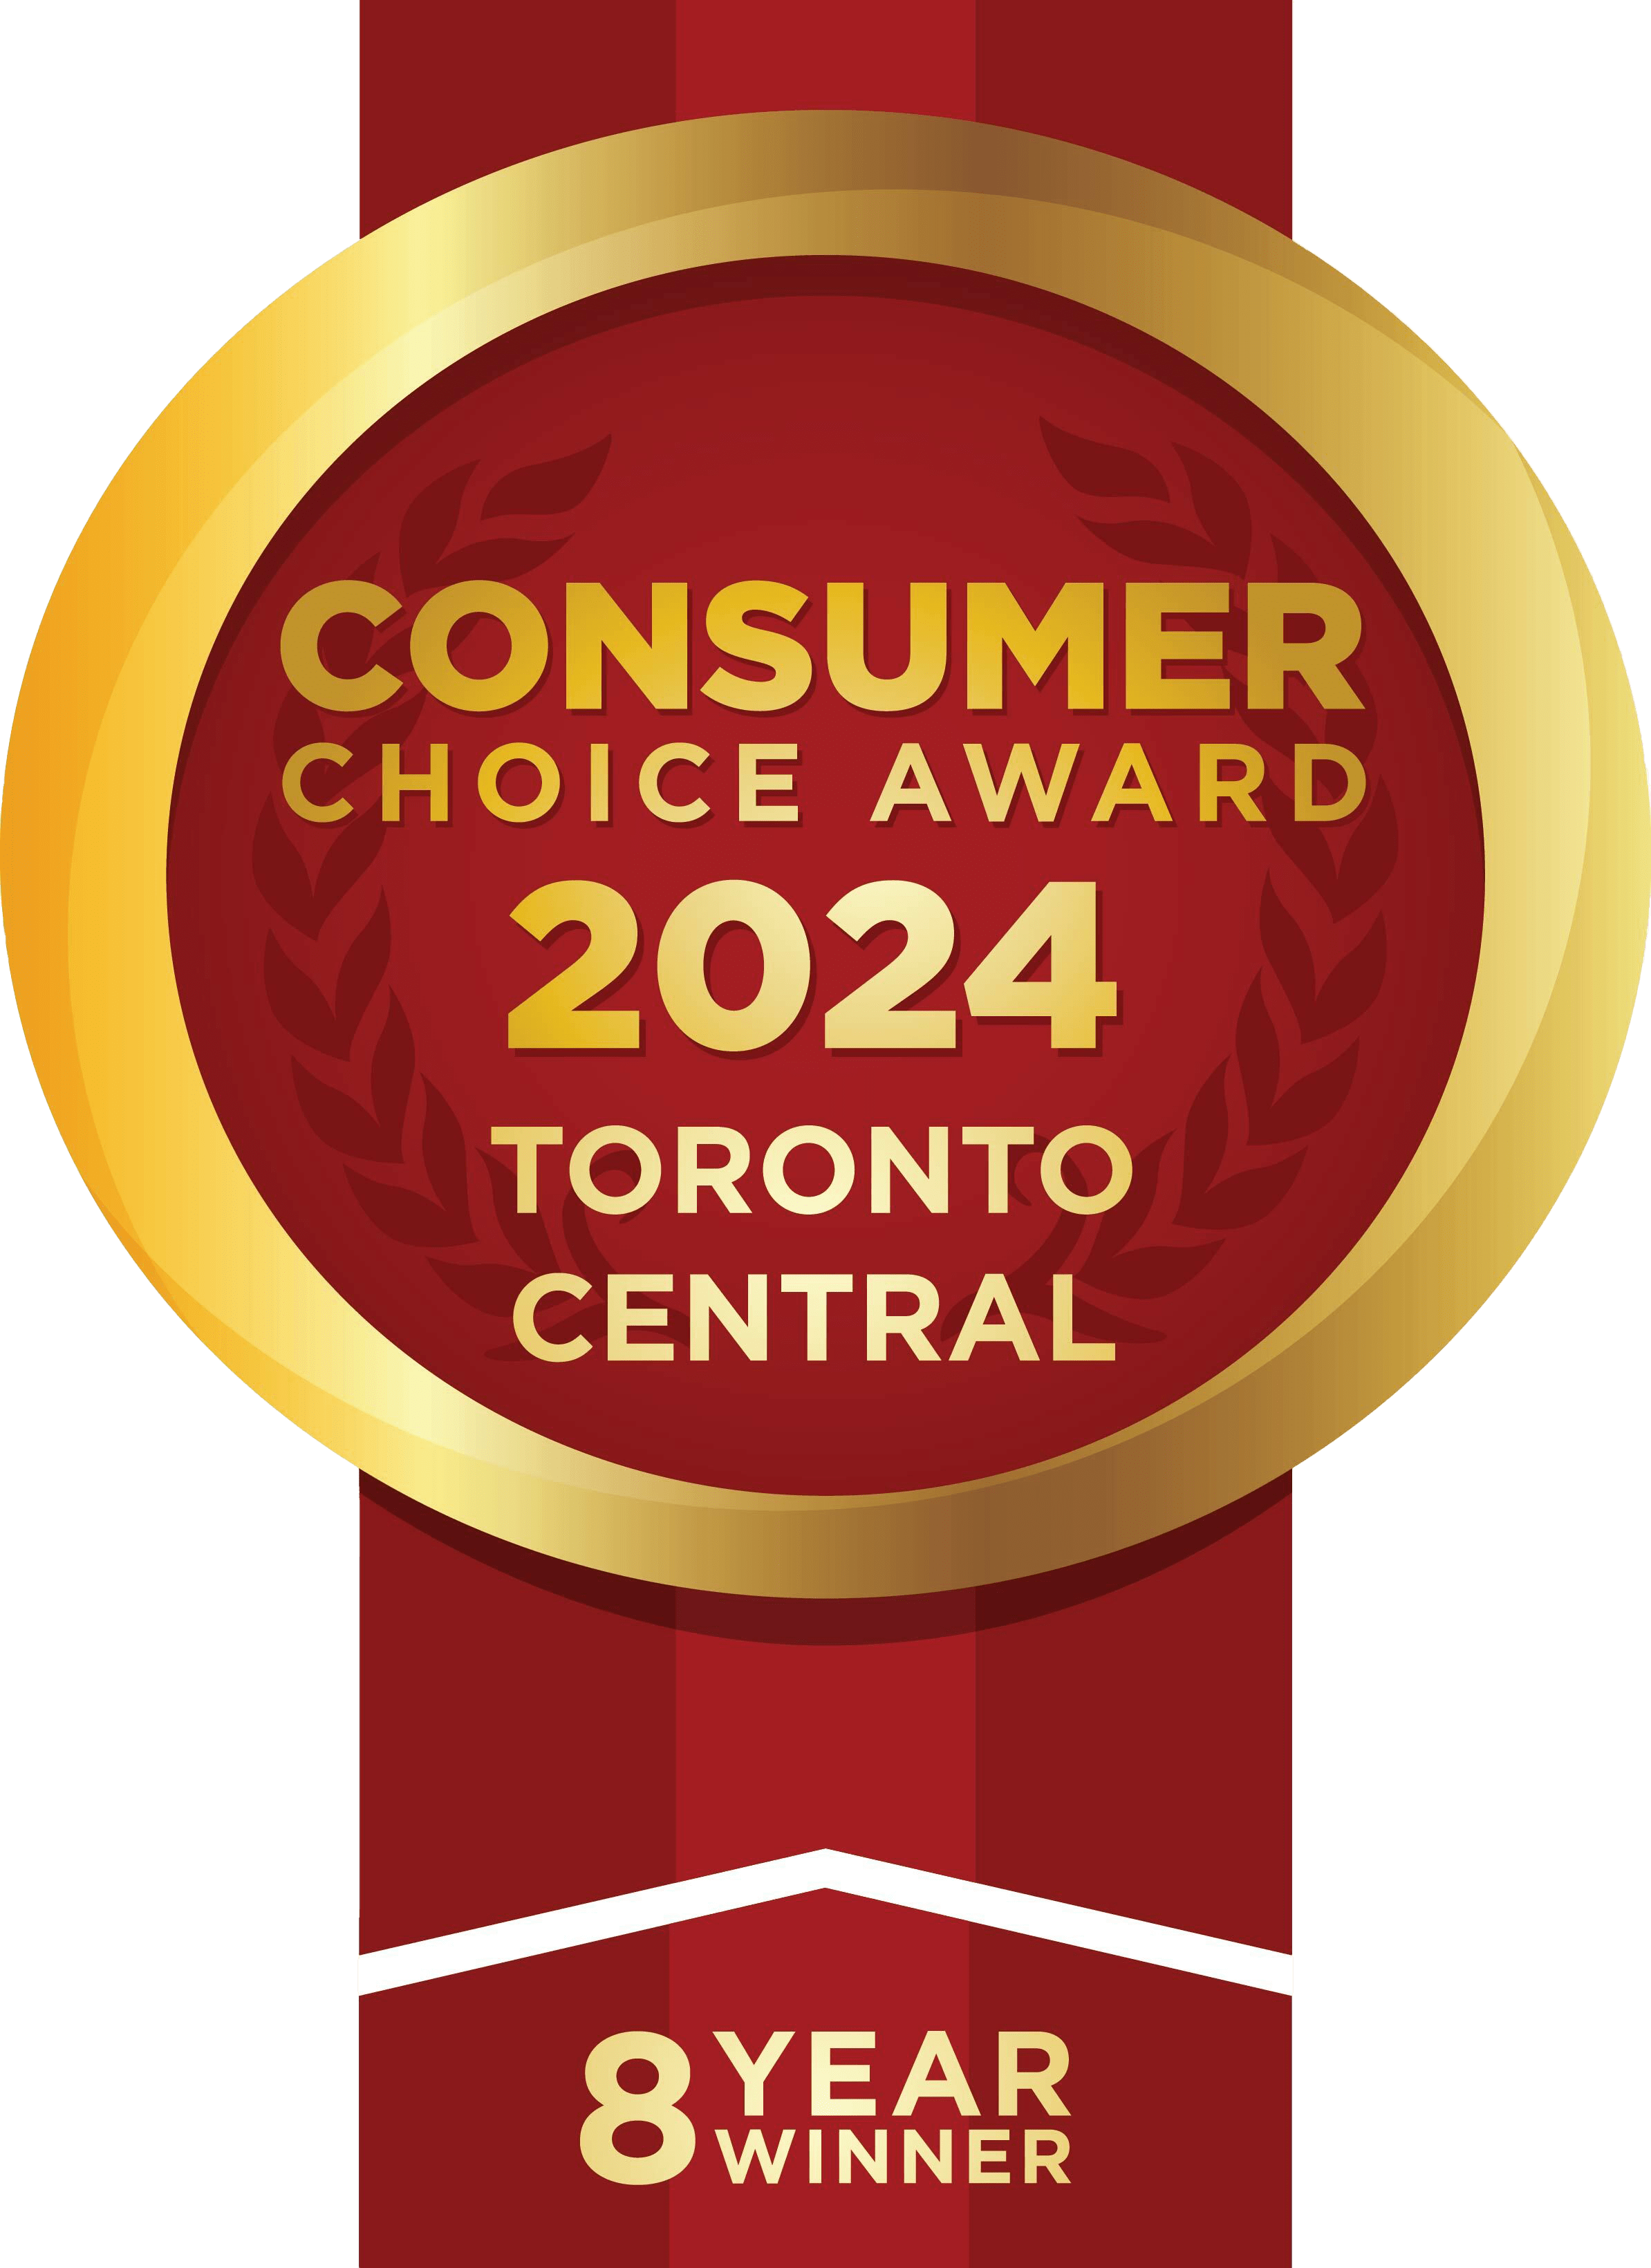 Consumers Choice Award 2024